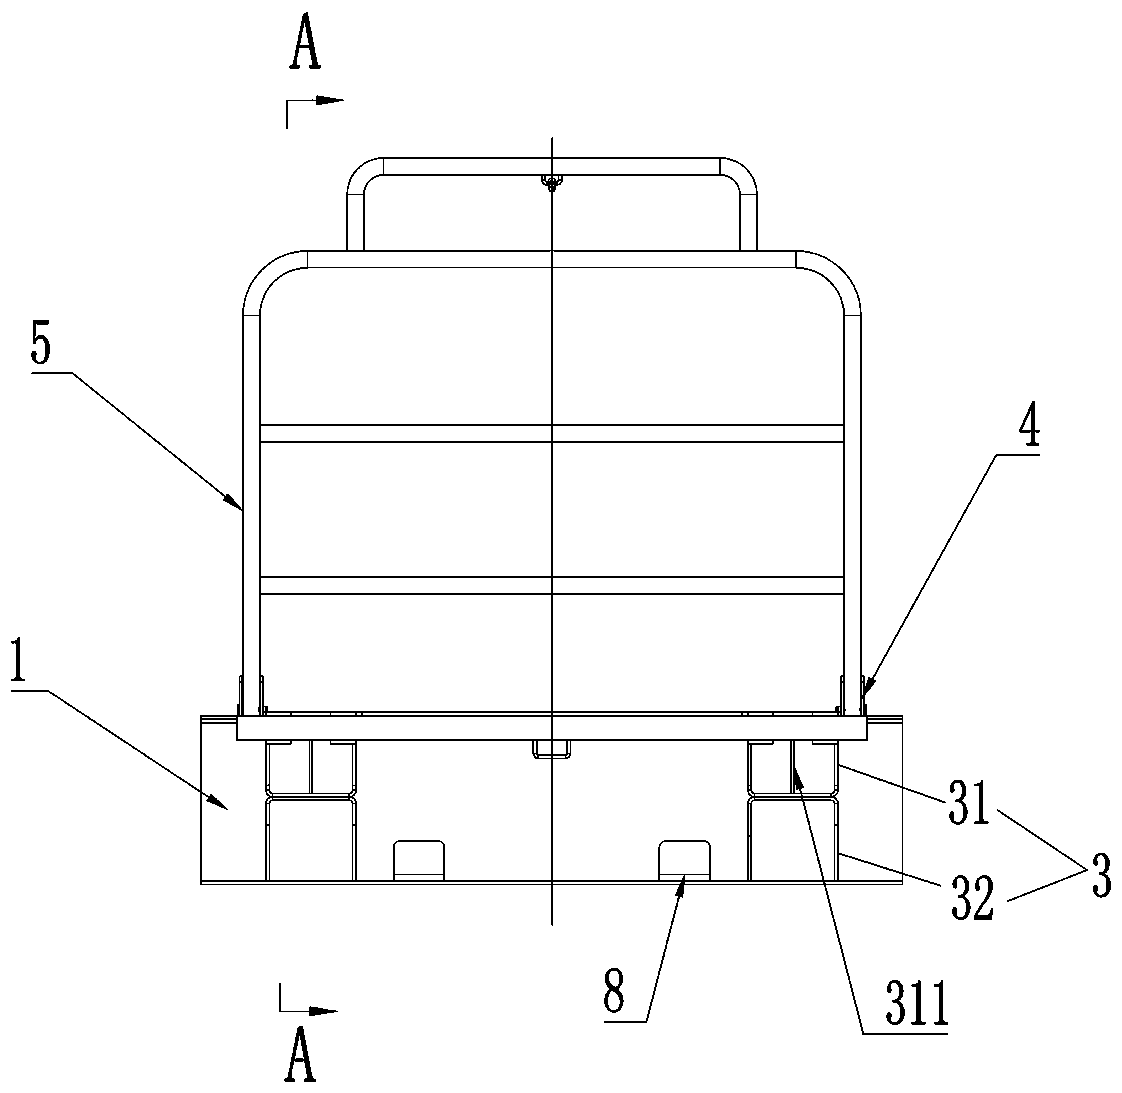 Folding traveling platform mechanism